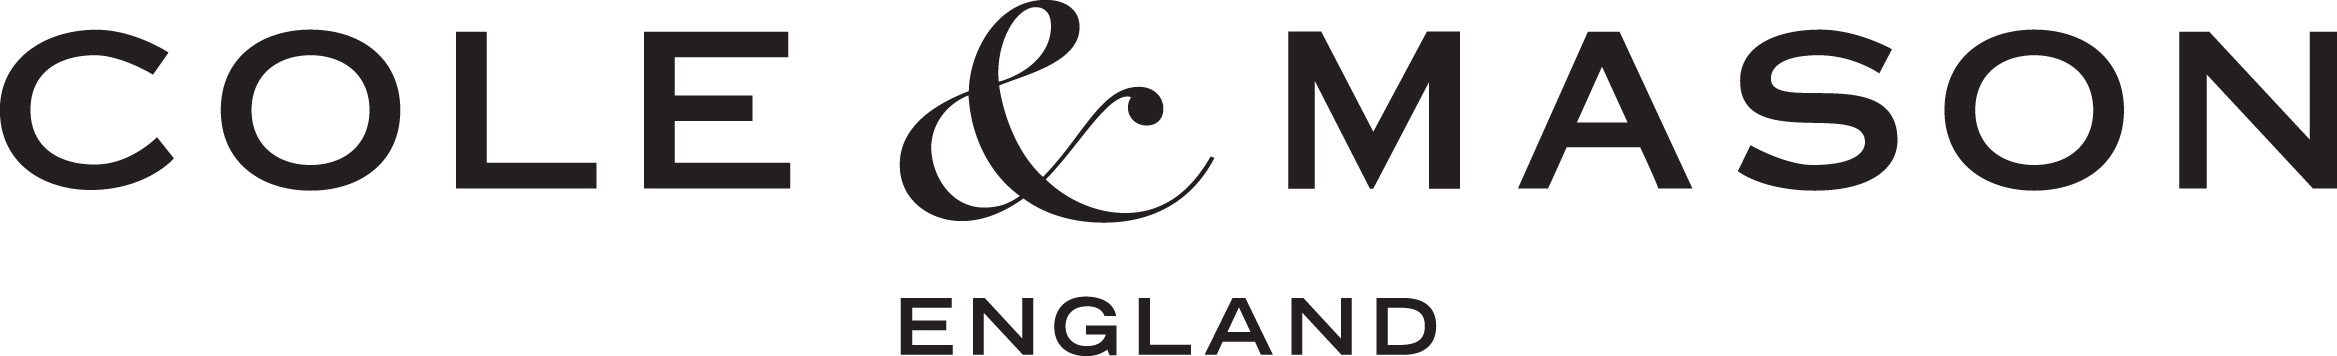 Cole & Mason logo England_BLK.jpg